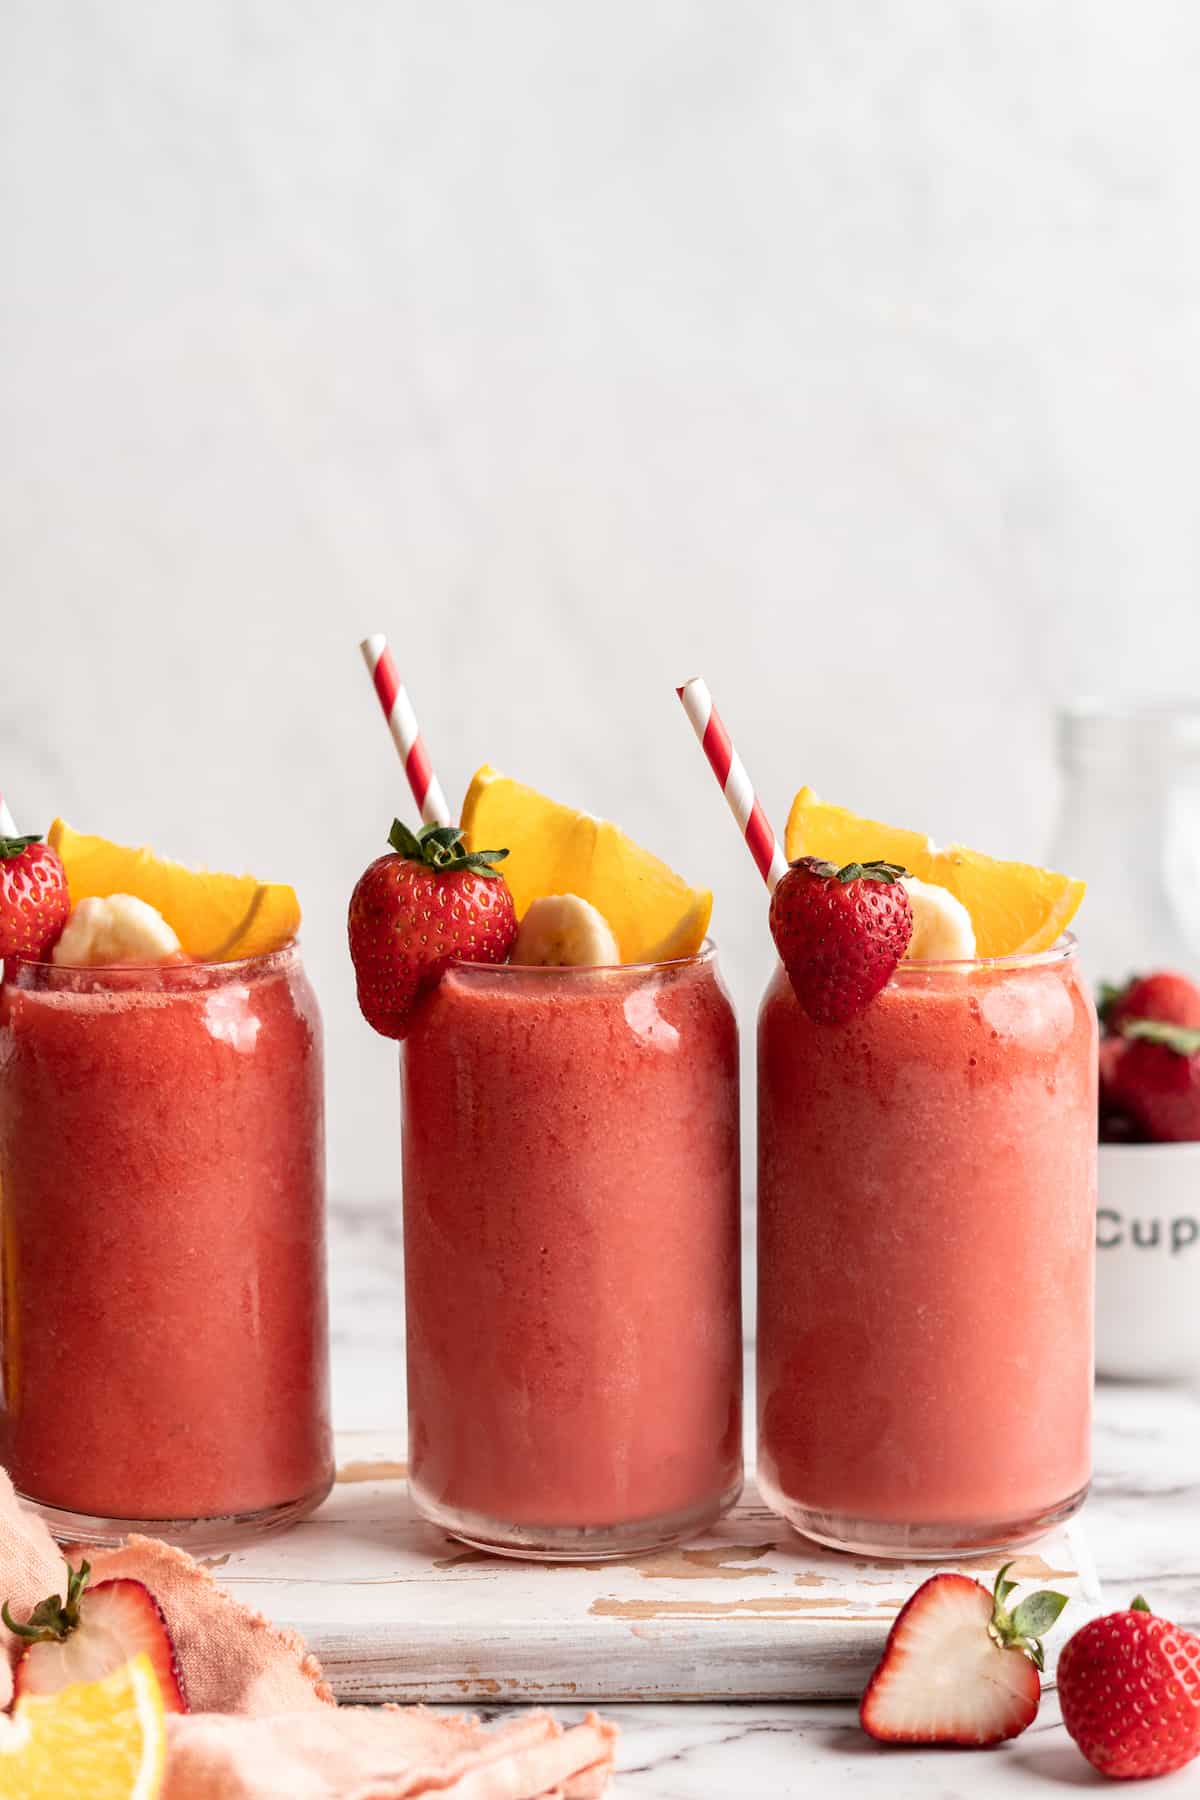 3 glasses of strawberry banana smoothie with straws and fresh fruit garnish